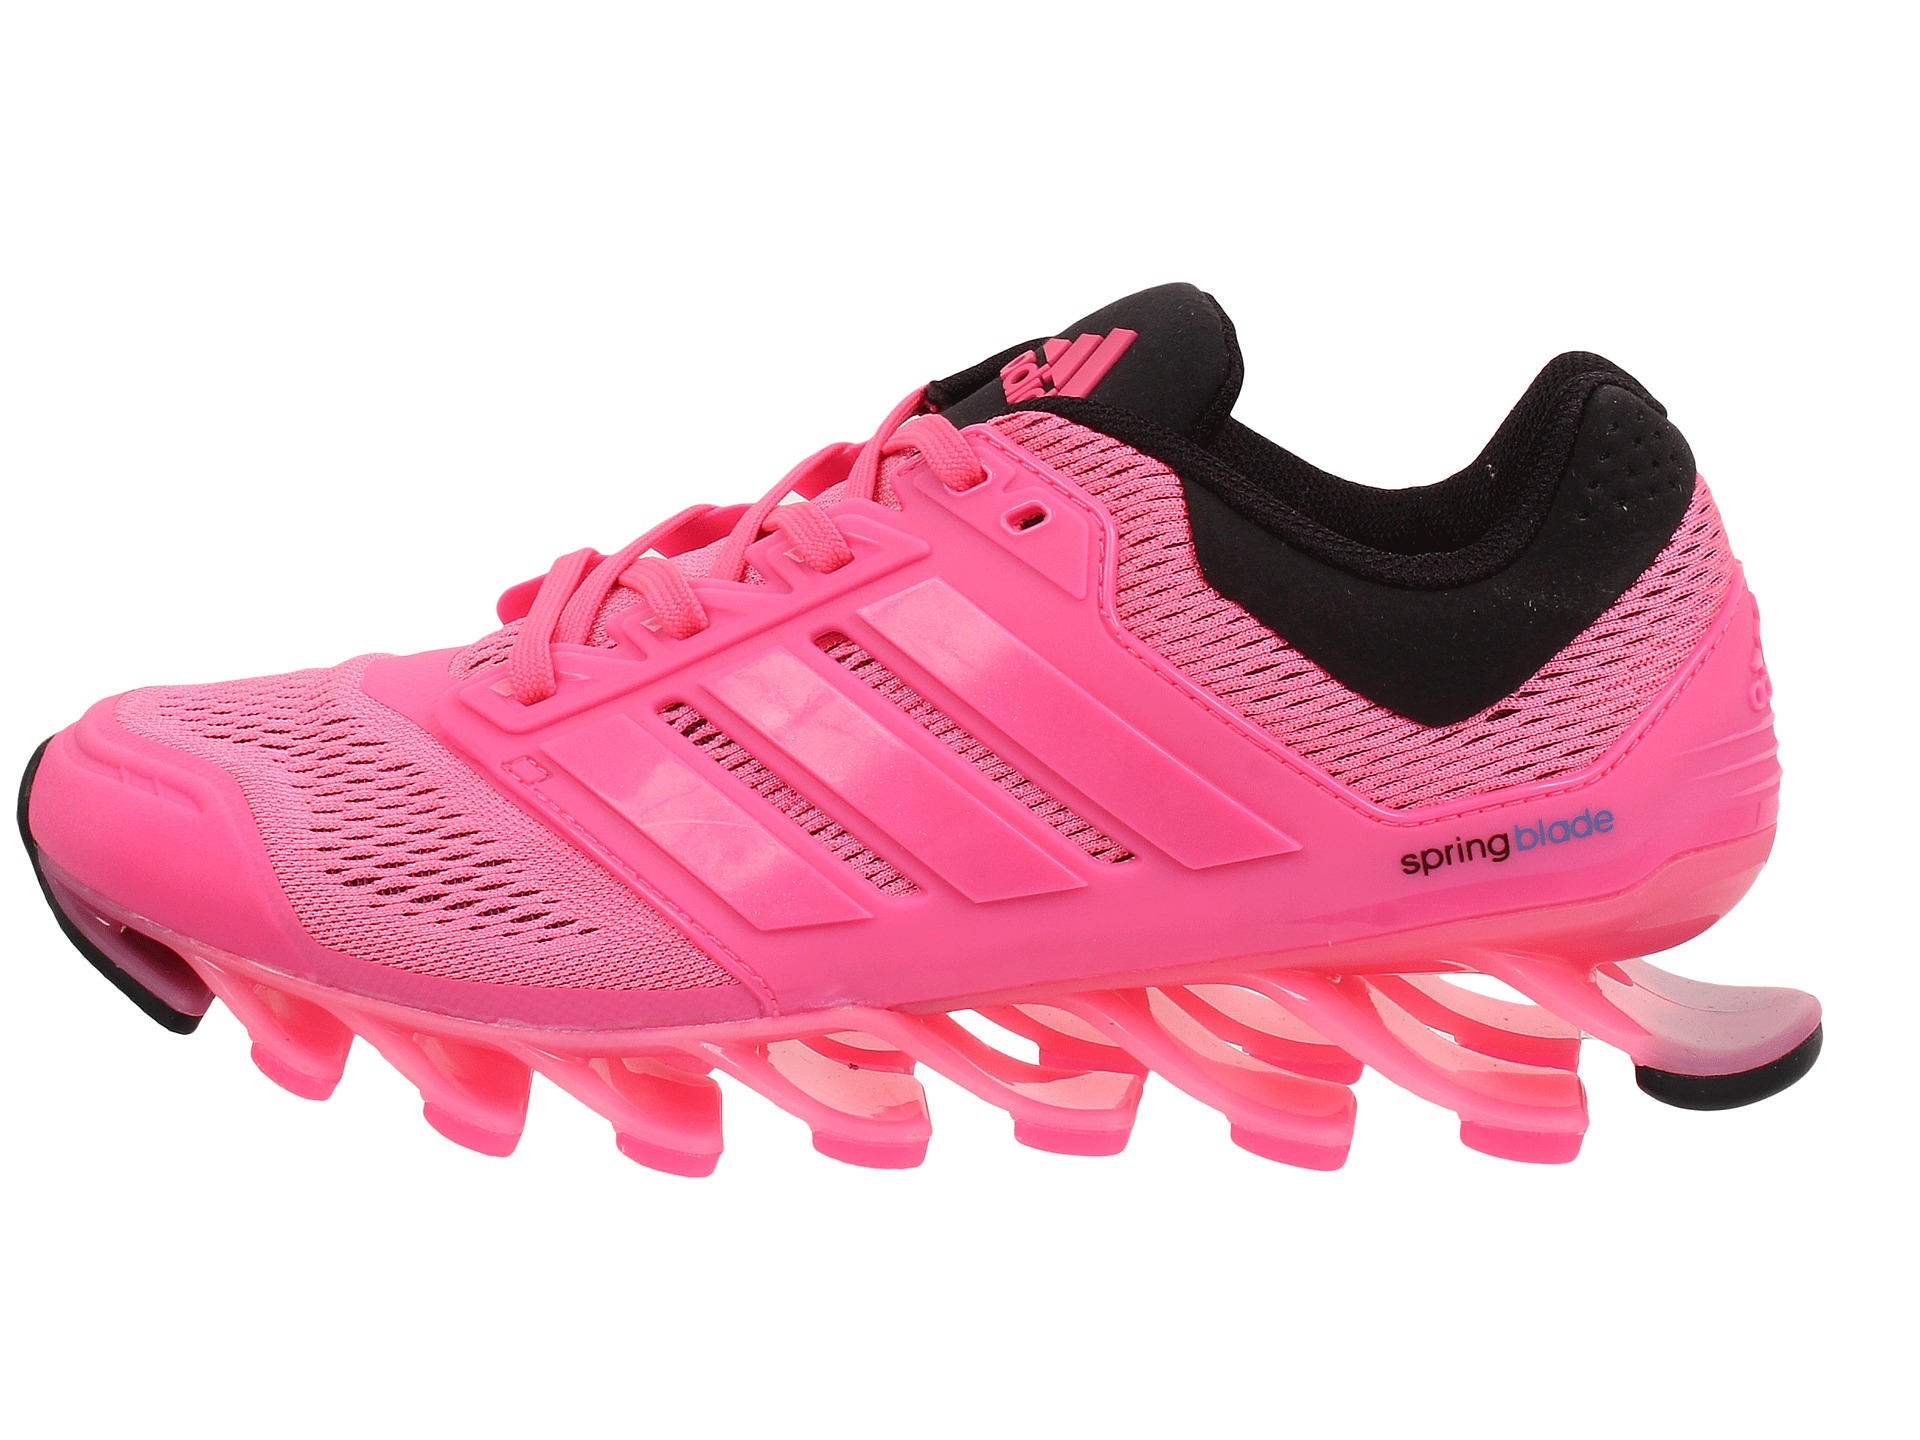 Lyst - Adidas Springblade Drive Mesh Low-Top Sneakers in Pink